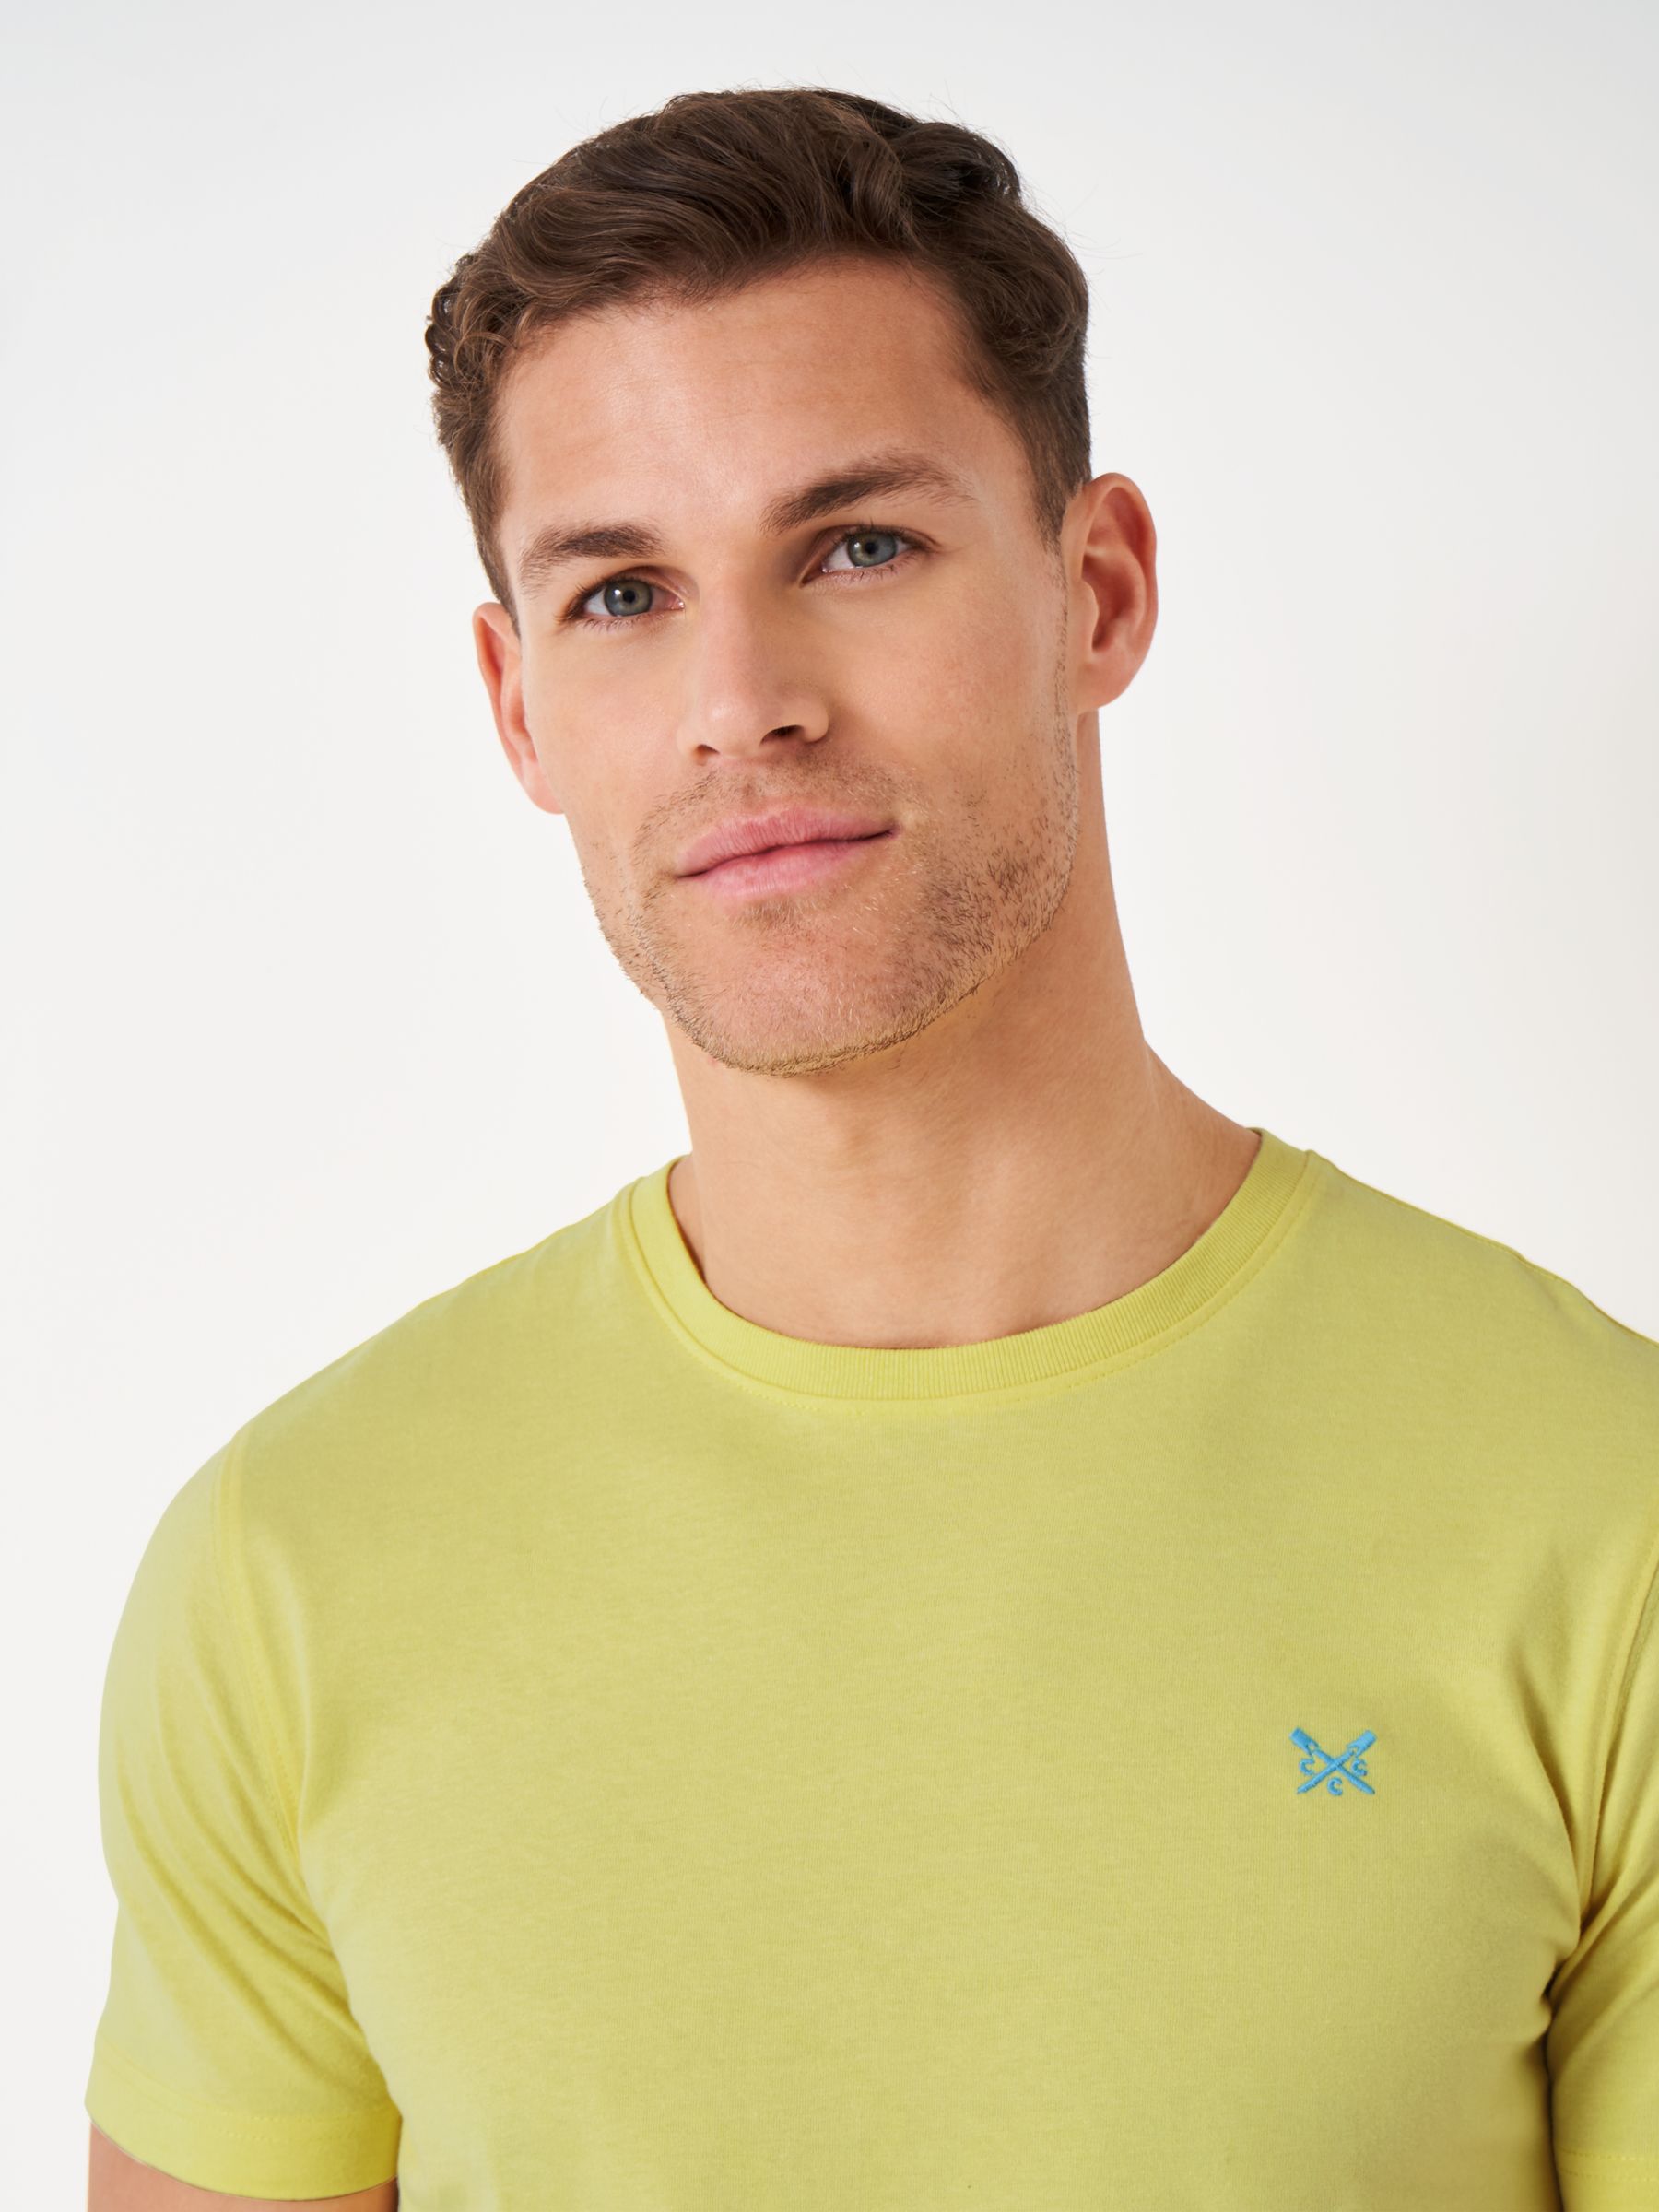 Crew Clothing Crew Neck T-Shirt, Lemon Yellow at John Lewis & Partners